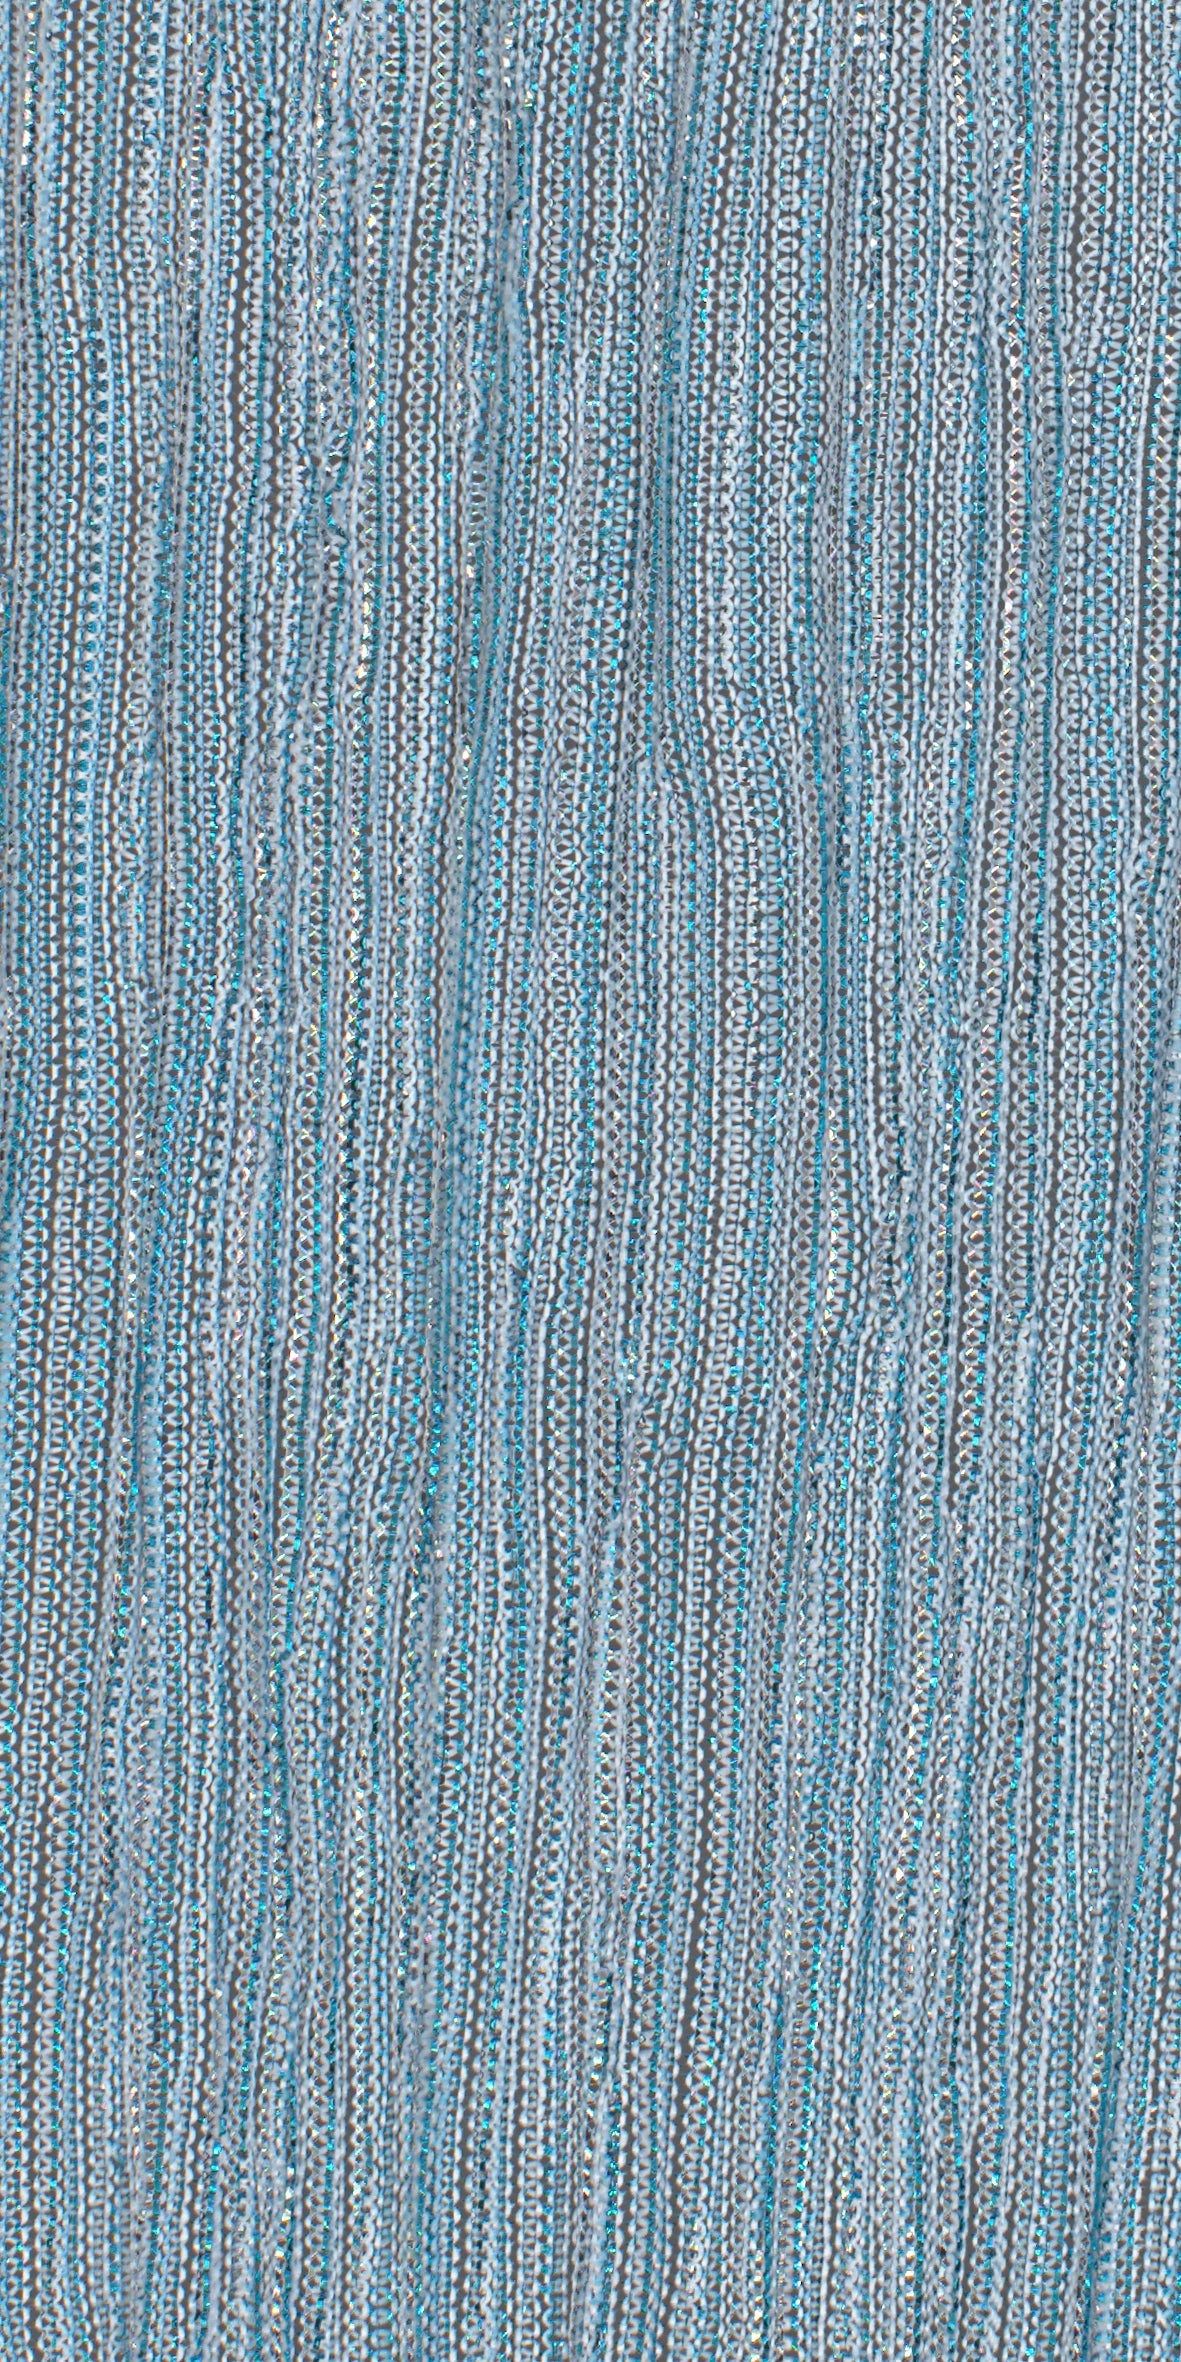 12006-08 Light Blue Silver Metallic Pleat Plain Dyed Blend 126g/yd 56&quot; blend blue knit metallic plain dyed pleat ppl new silver Metallic, Pleat - knit fabric - woven fabric - fabric company - fabric wholesale - fabric b2b - fabric factory - high quality fabric - hong kong fabric - fabric hk - acetate fabric - cotton fabric - linen fabric - metallic fabric - nylon fabric - polyester fabric - spandex fabric - chun wing hing - cwh hk - fabric worldwide ship - 針織布 - 梳織布 - 布料公司- 布料批發 - 香港布料 - 秦榮興